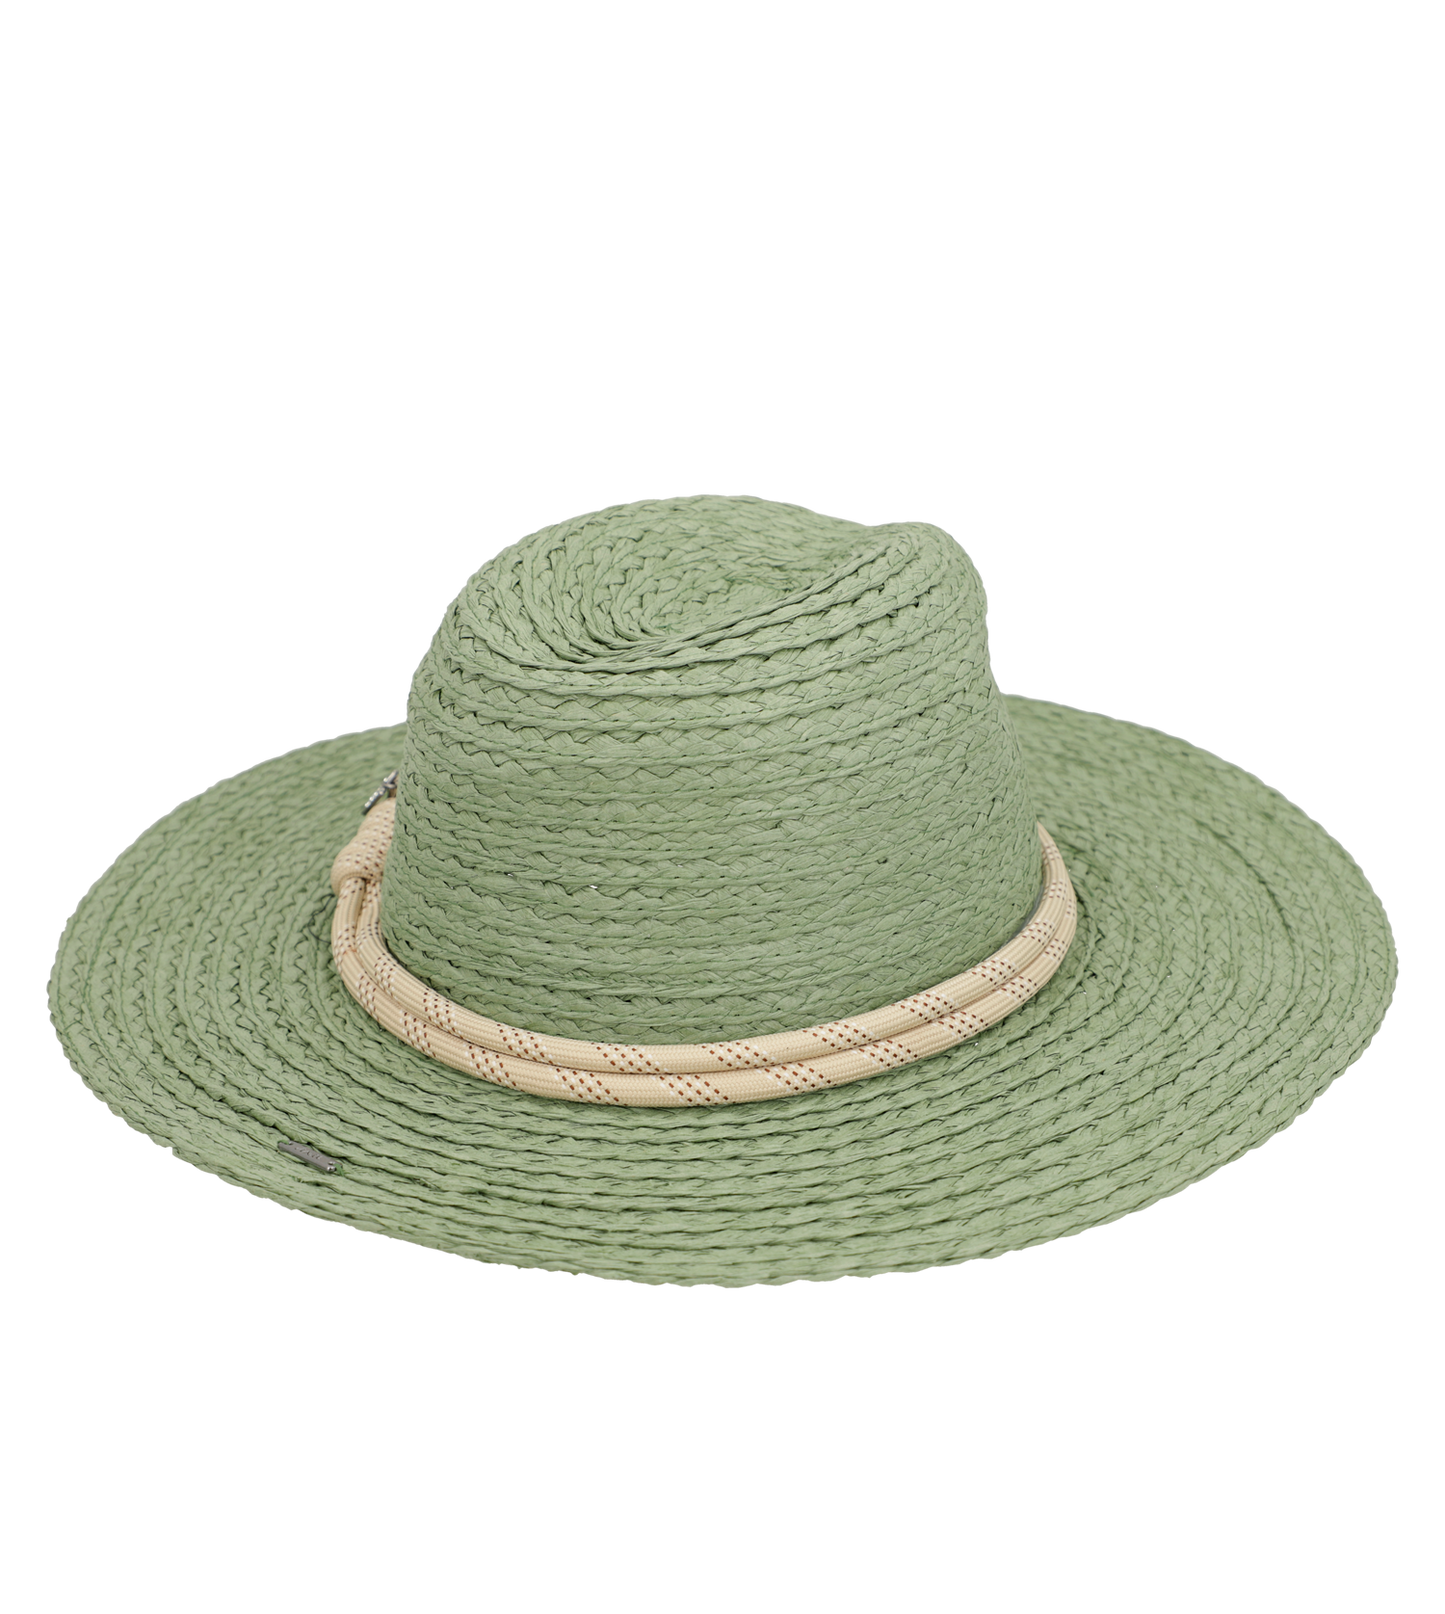 Anekke Amazonia kalap